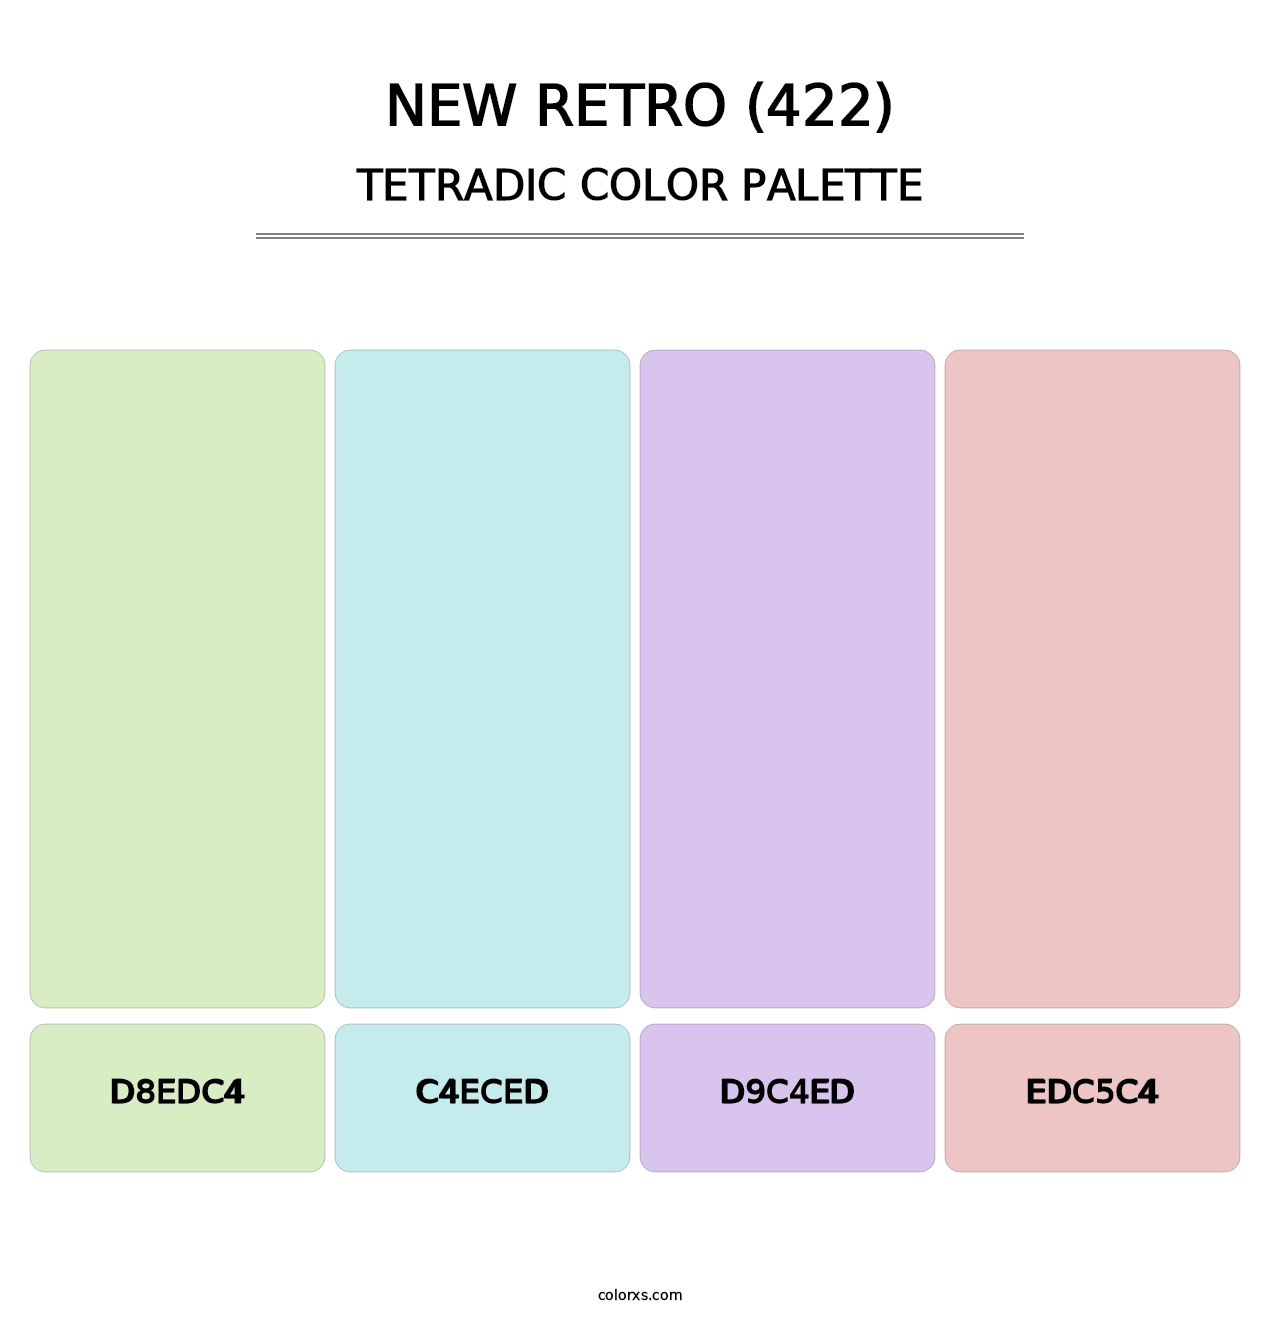 New Retro (422) - Tetradic Color Palette